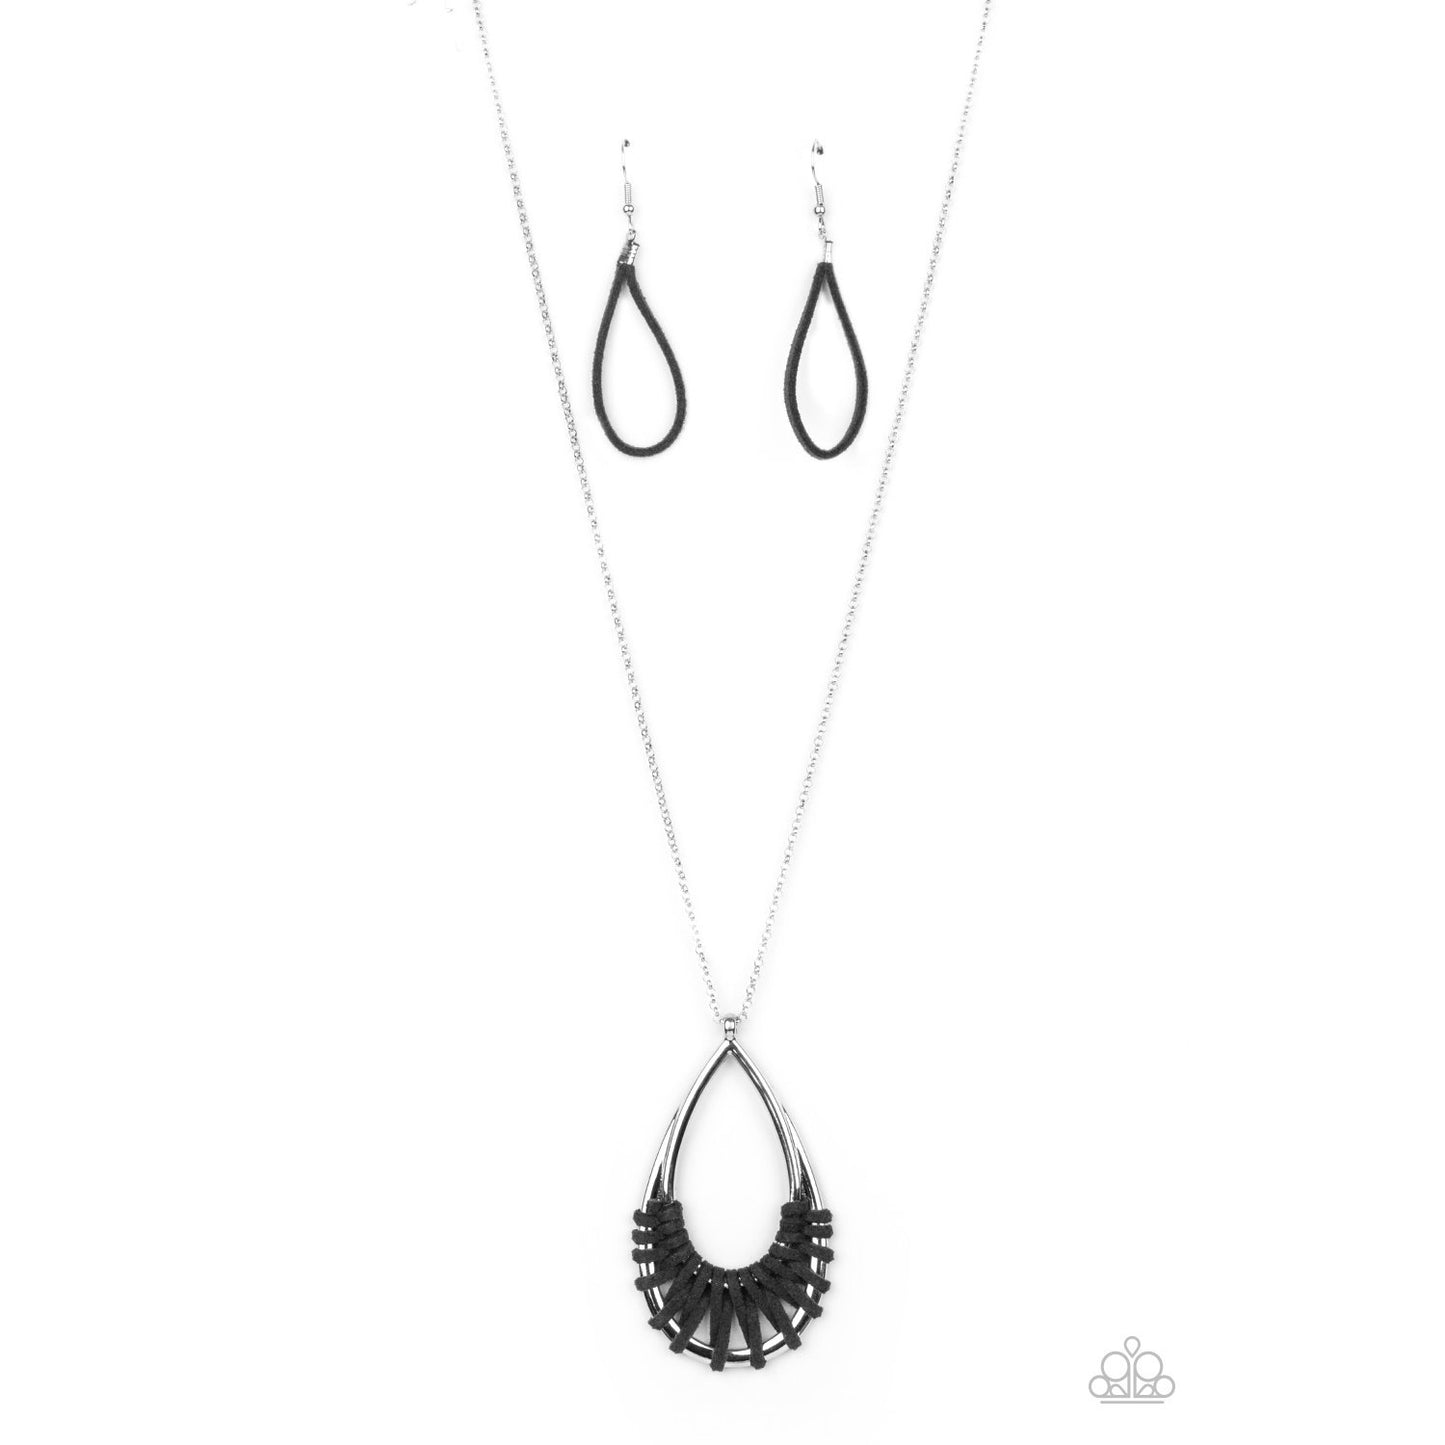 Homespun Artifact - Black Necklace - Paparazzi Accessories - GlaMarous Titi Jewels